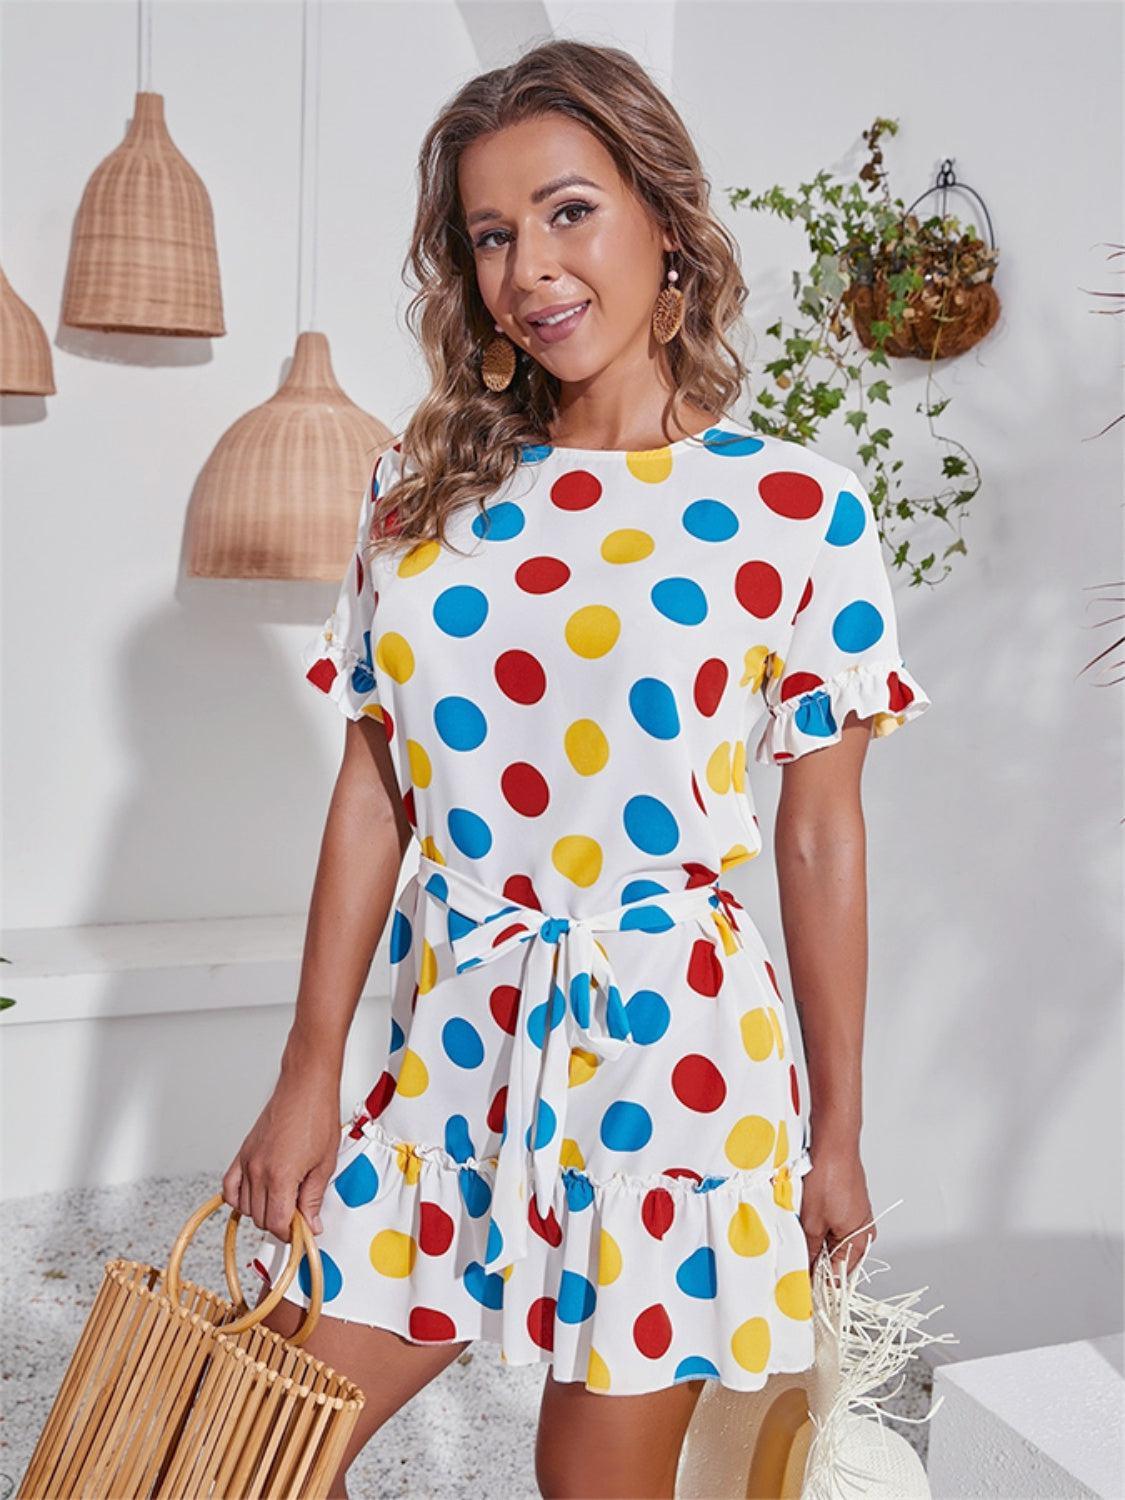 a woman in a polka dot dress holding a basket